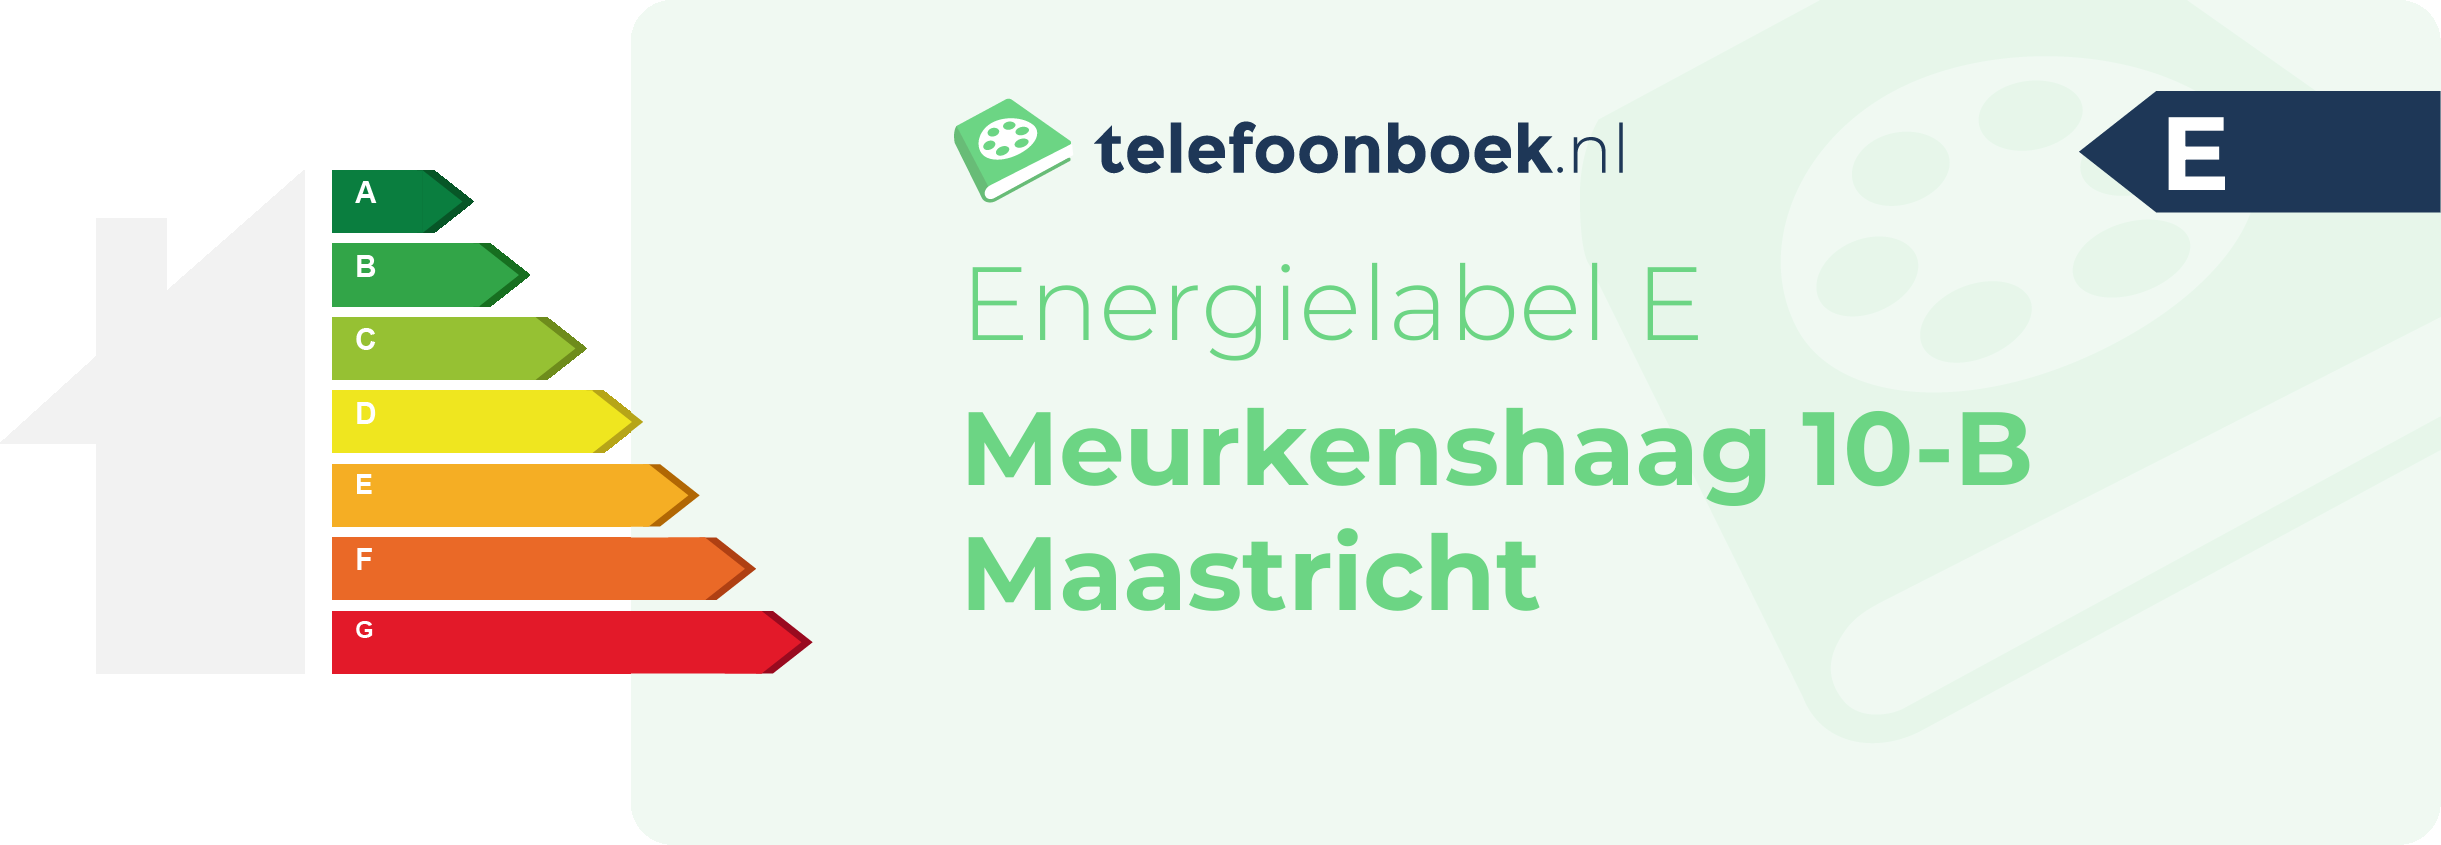 Energielabel Meurkenshaag 10-B Maastricht